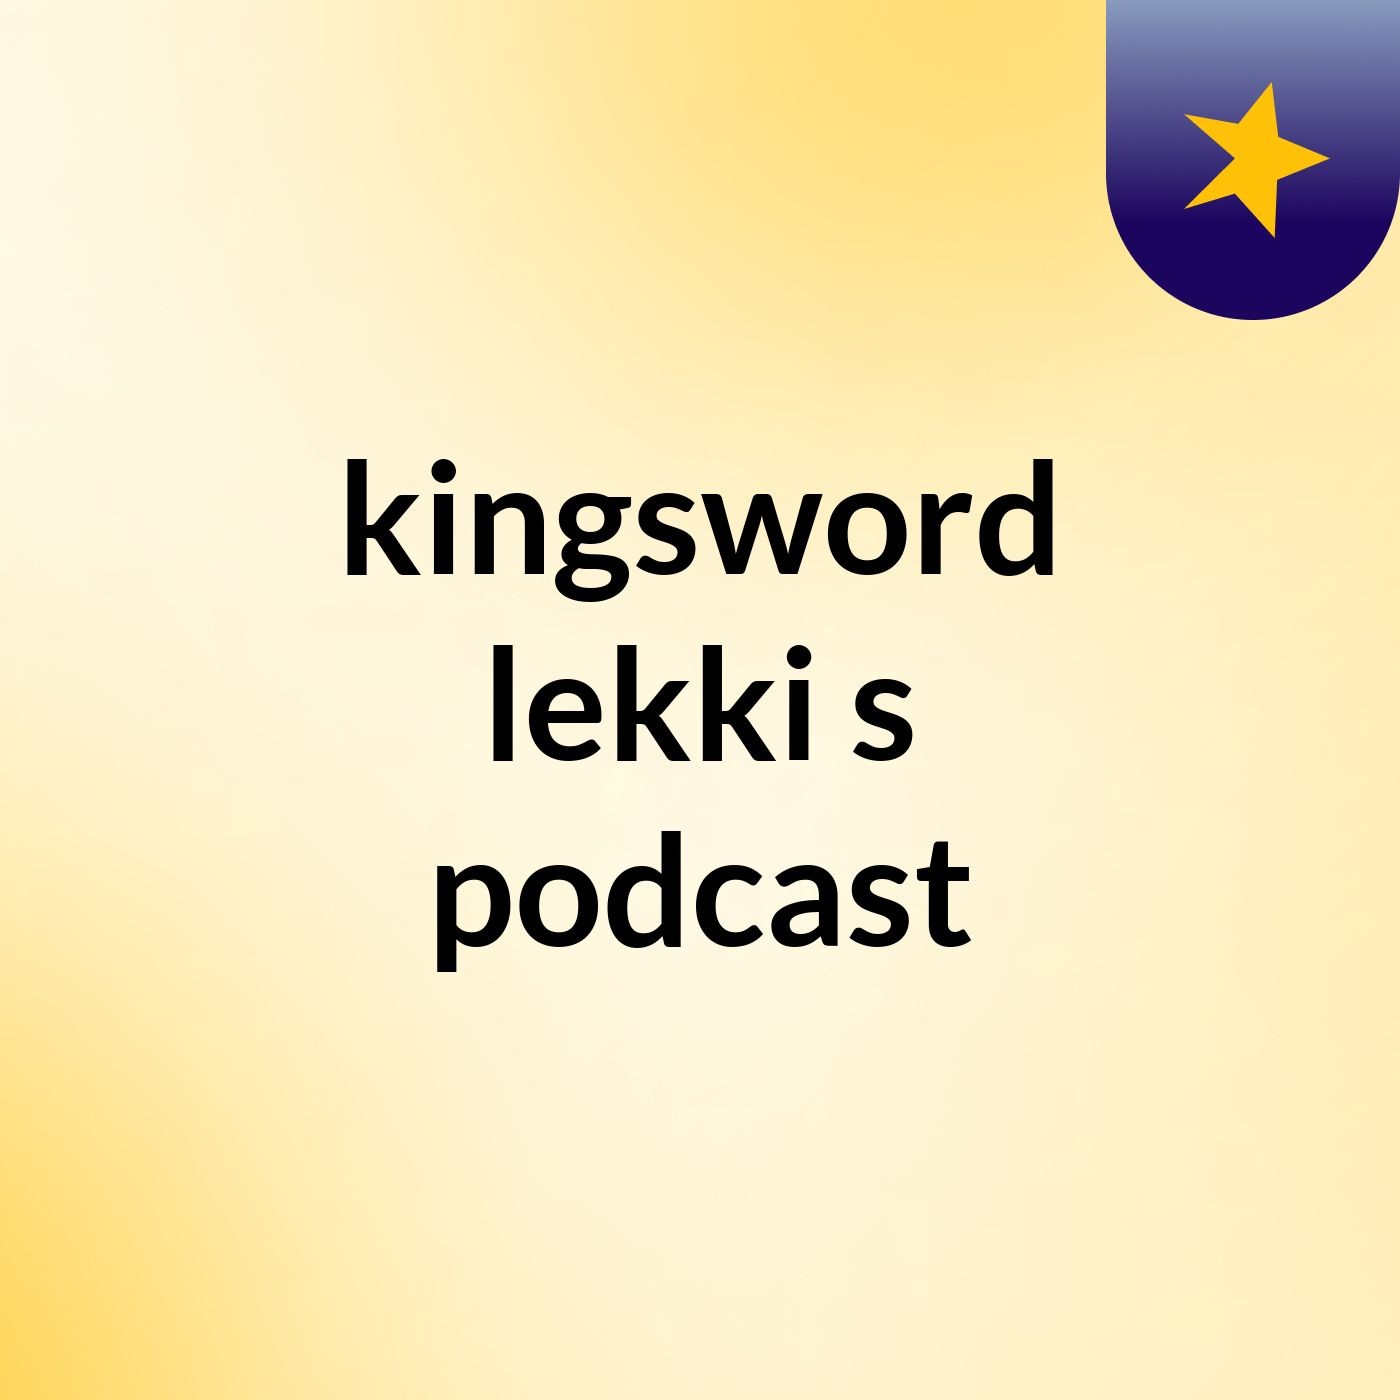 kingsword lekki's podcast